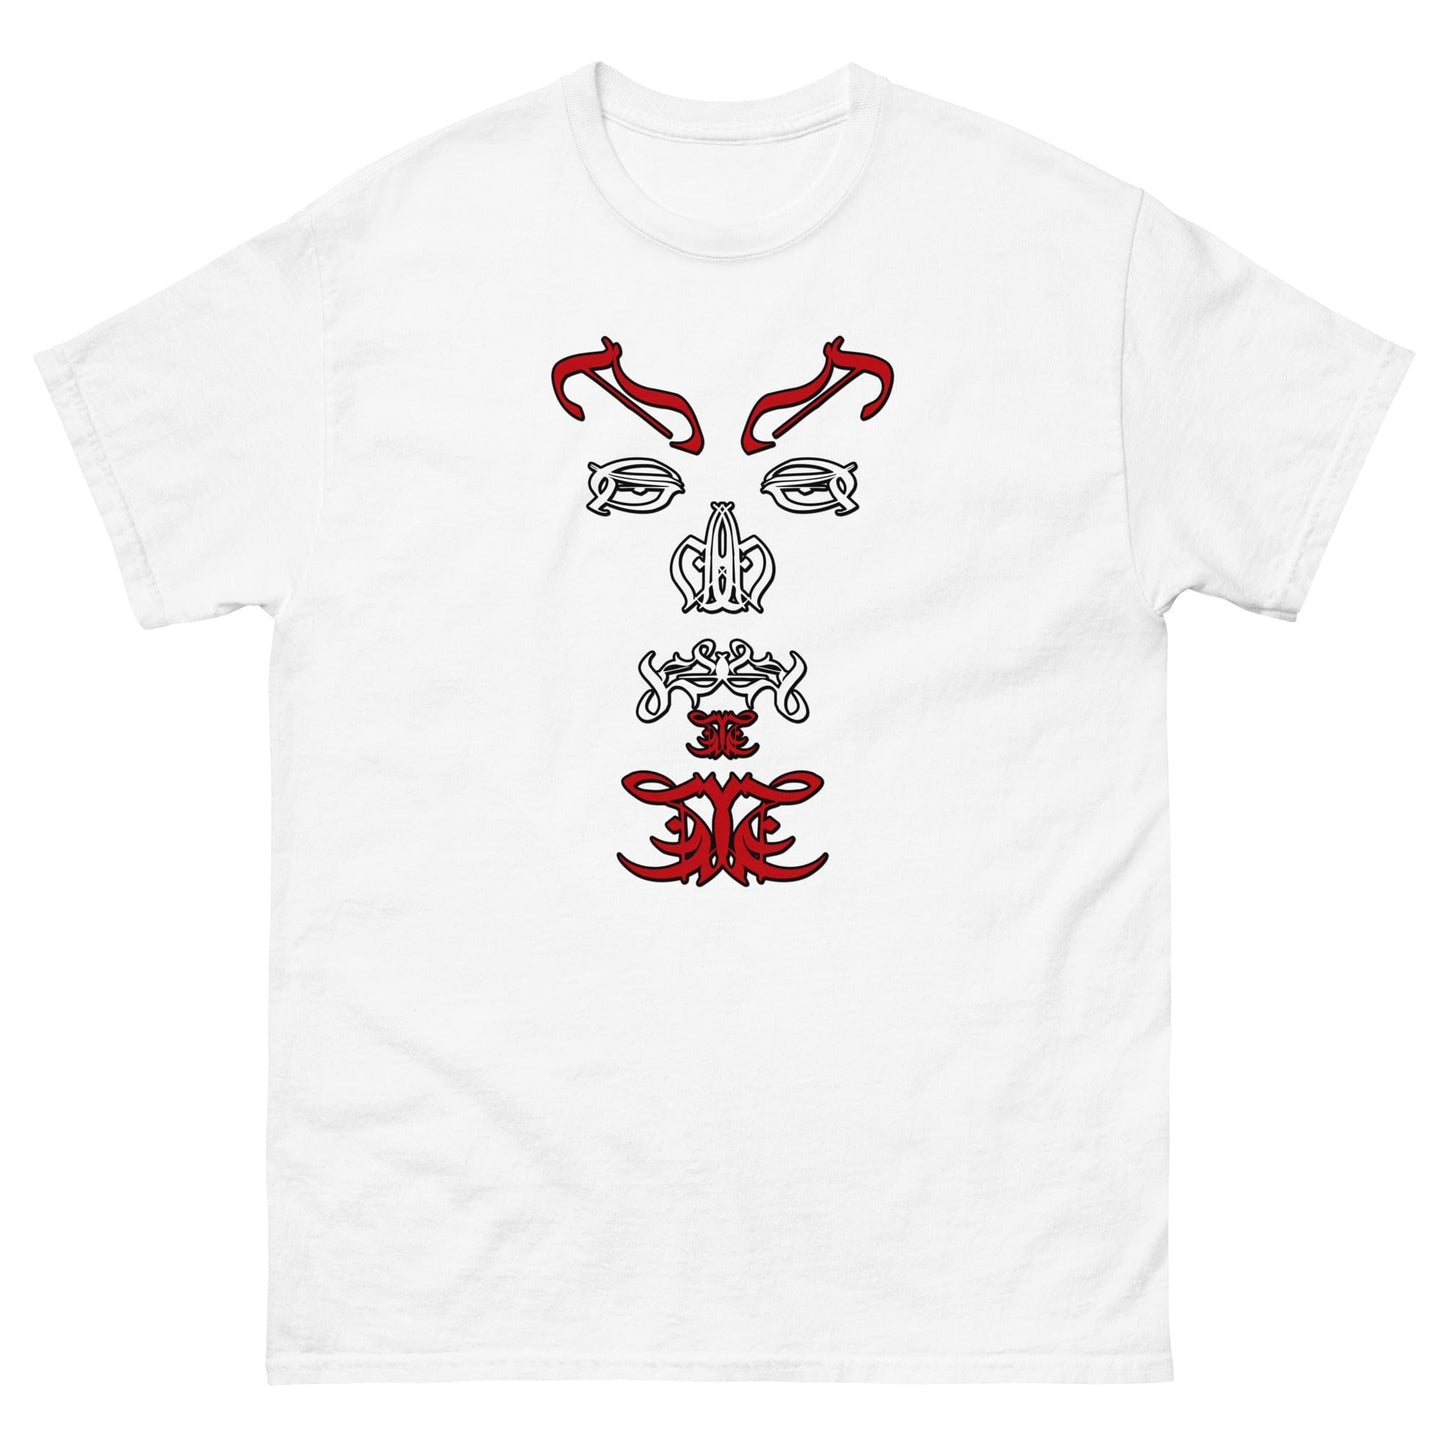 Satan Typographic Face T-shirt White / S